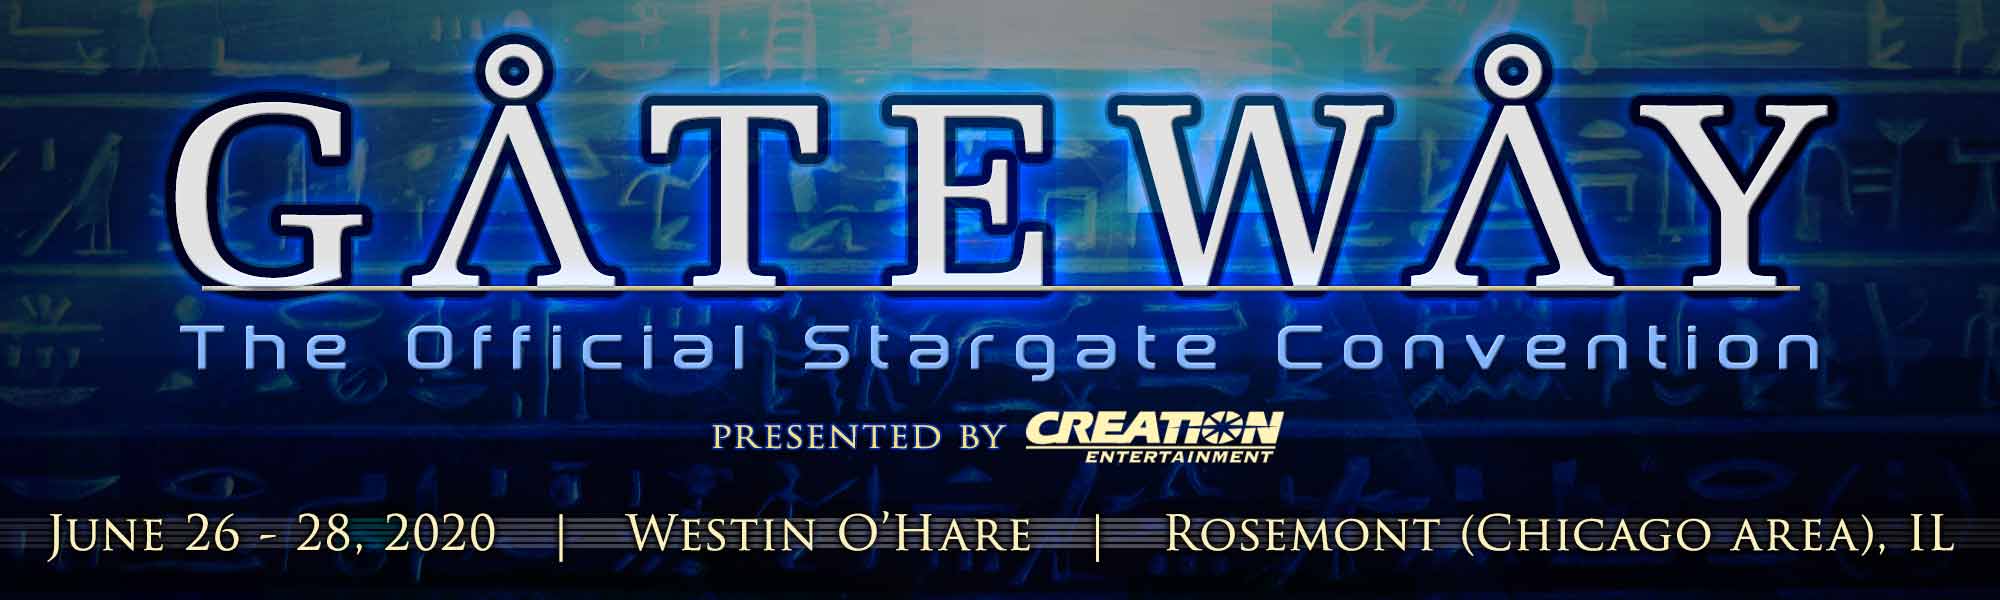 Creation Entertainment's presents GatewayThe Official Stargate